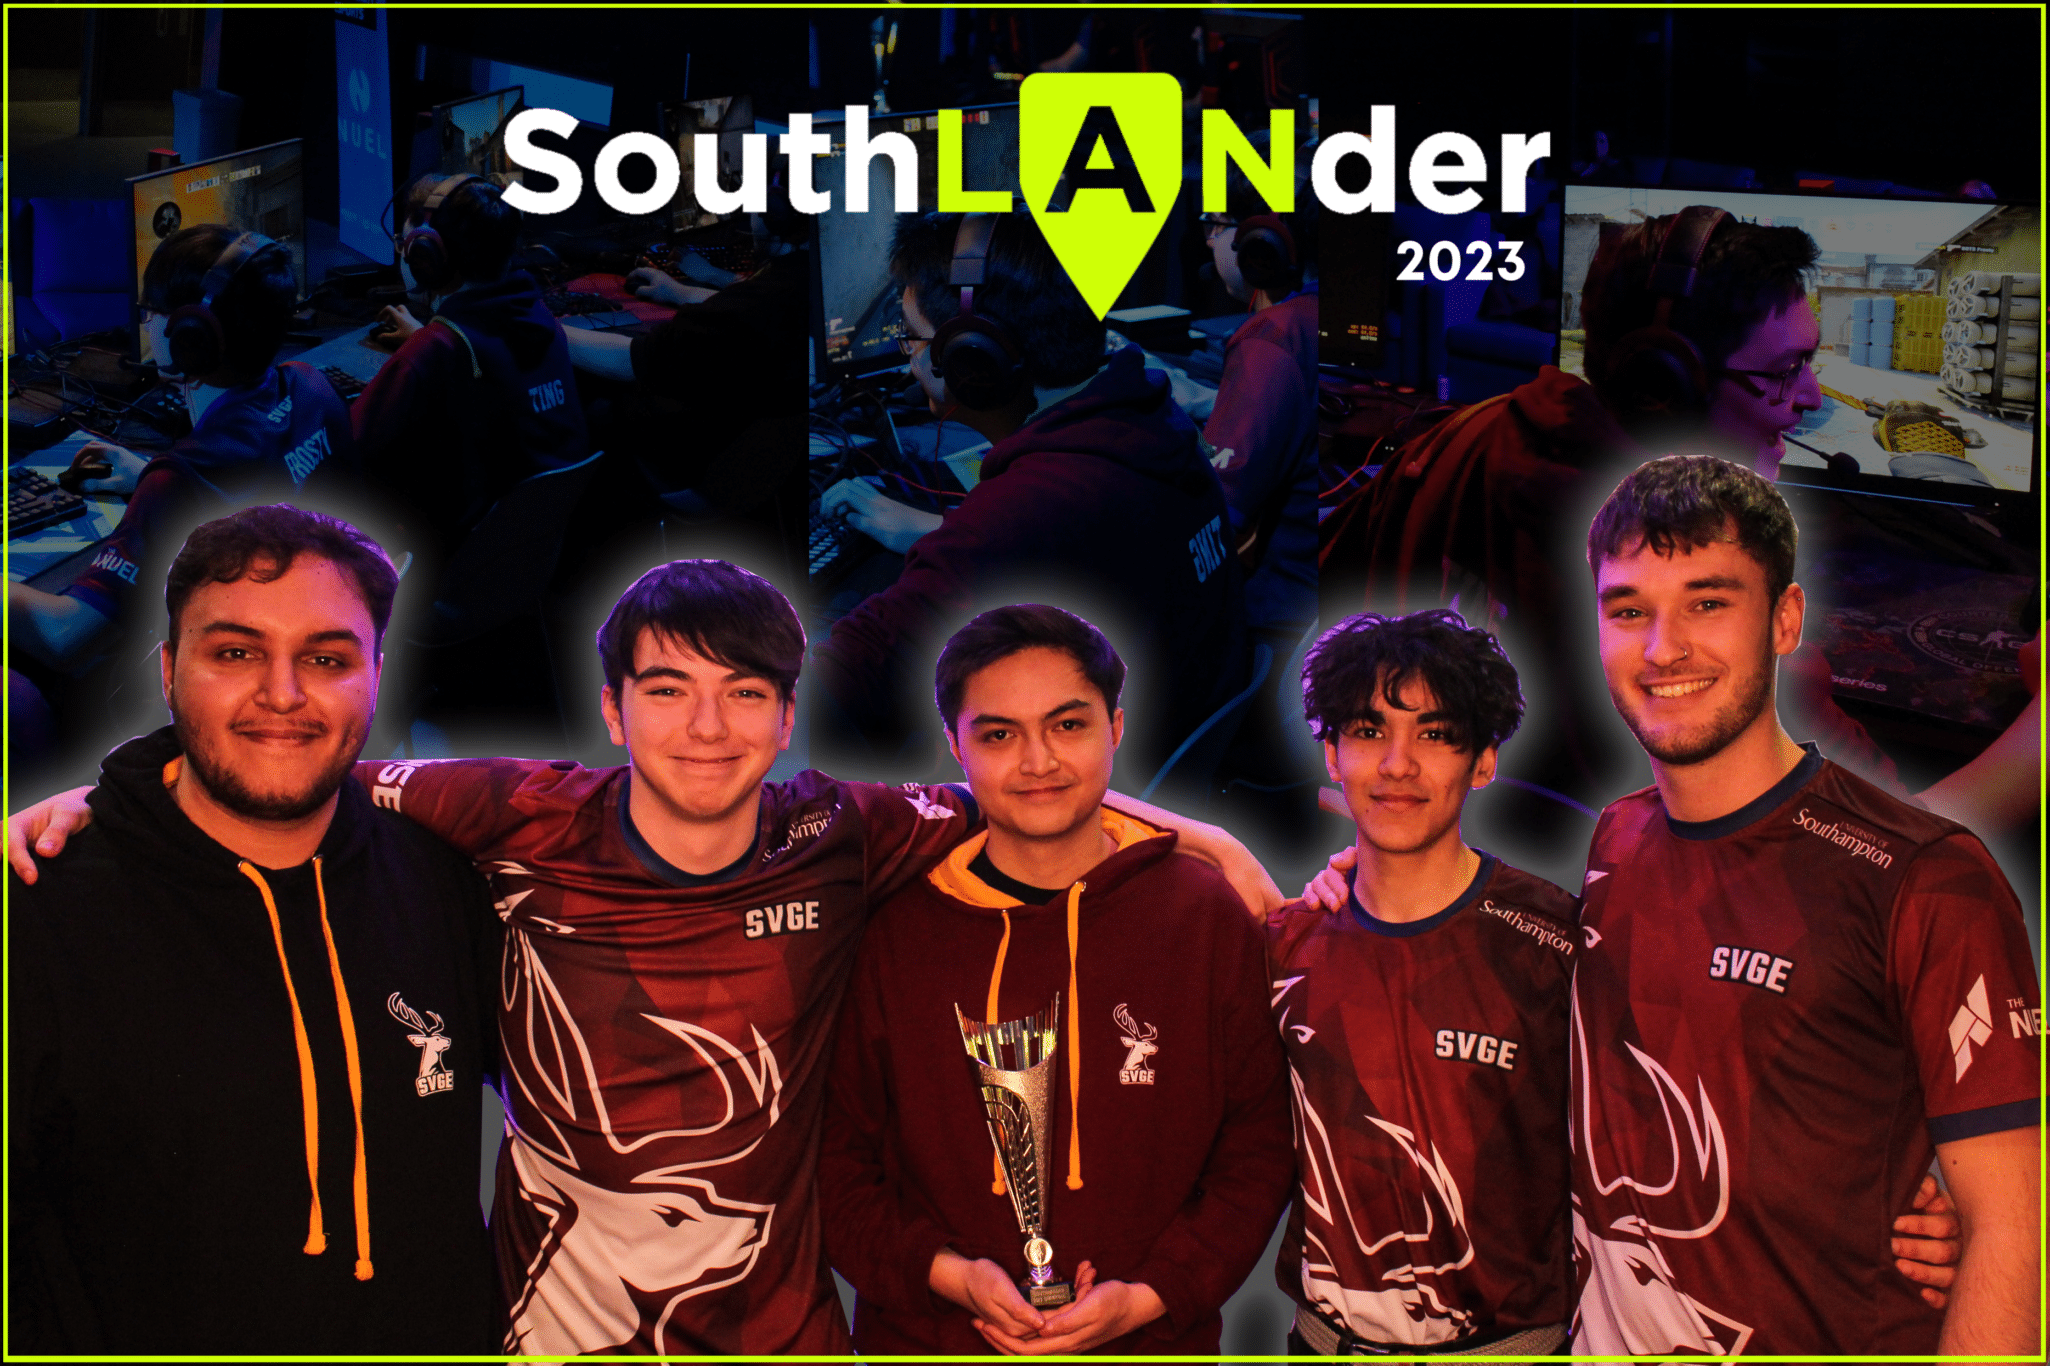 University of Southampton students host SouthLANder esports event